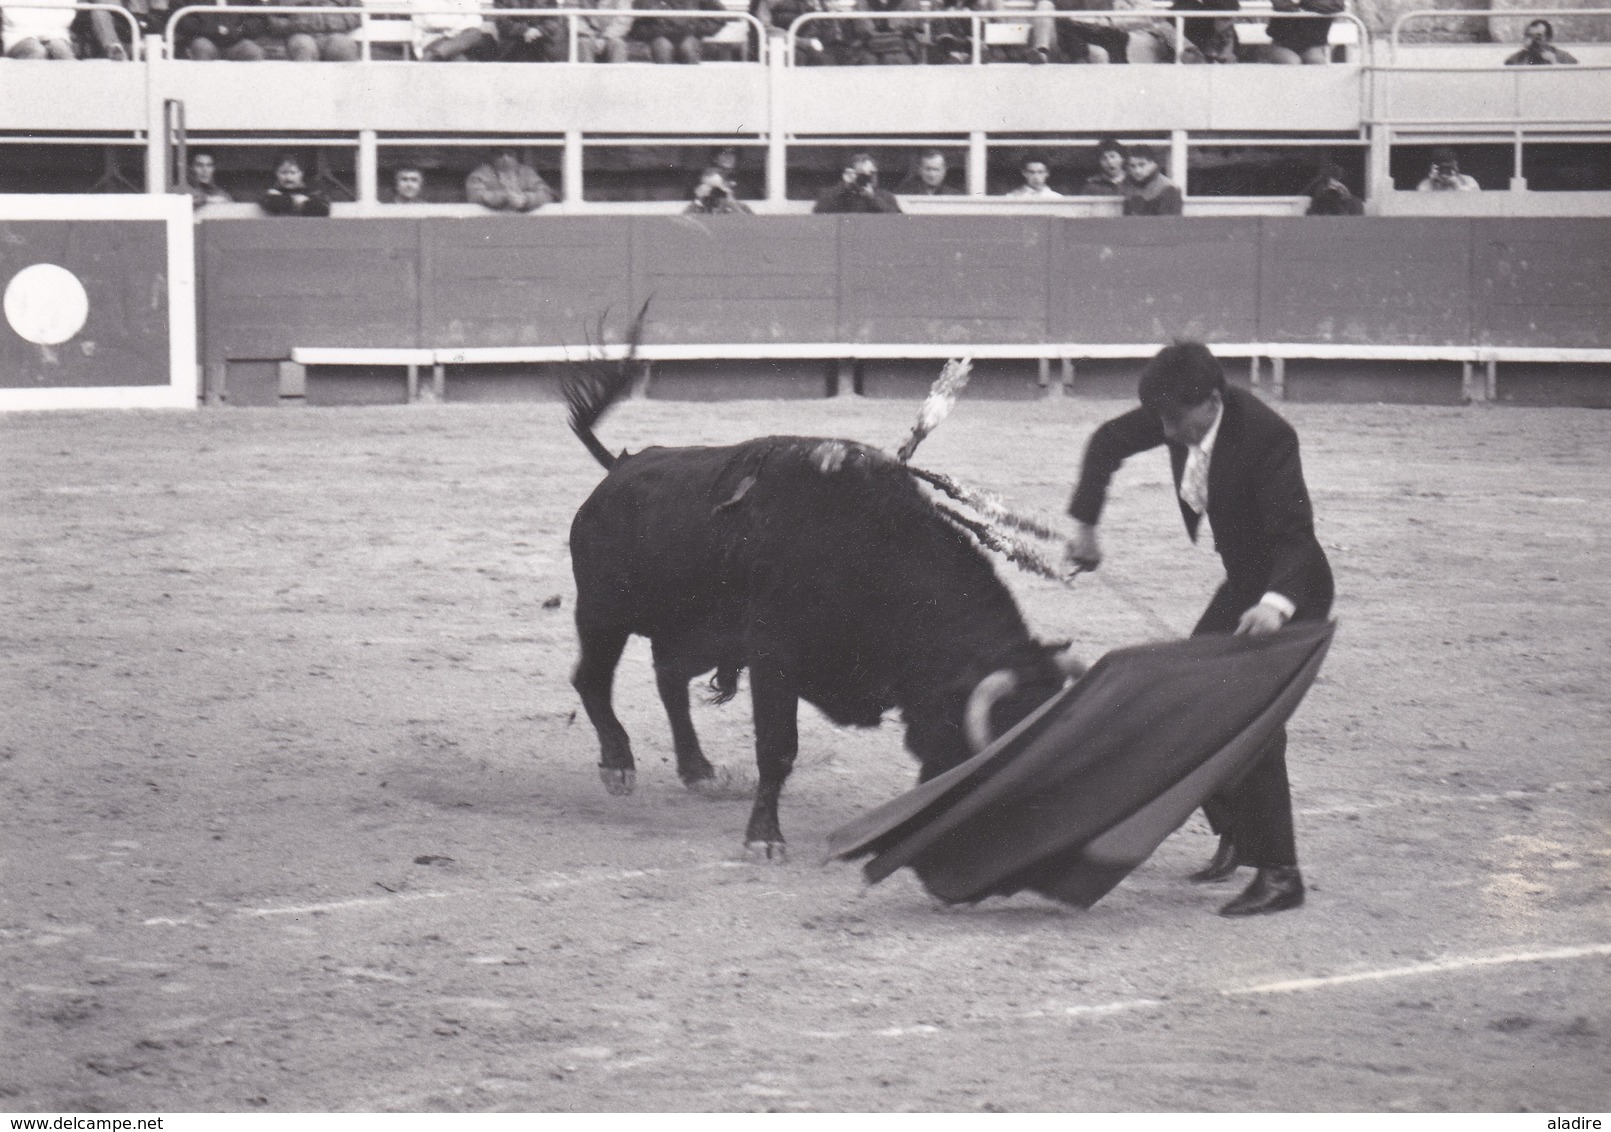 Collections de 93 photos NB et couleur CORRIDA DE TORO, course de taureau, TOREADOR, picador avec/sans mention au verso